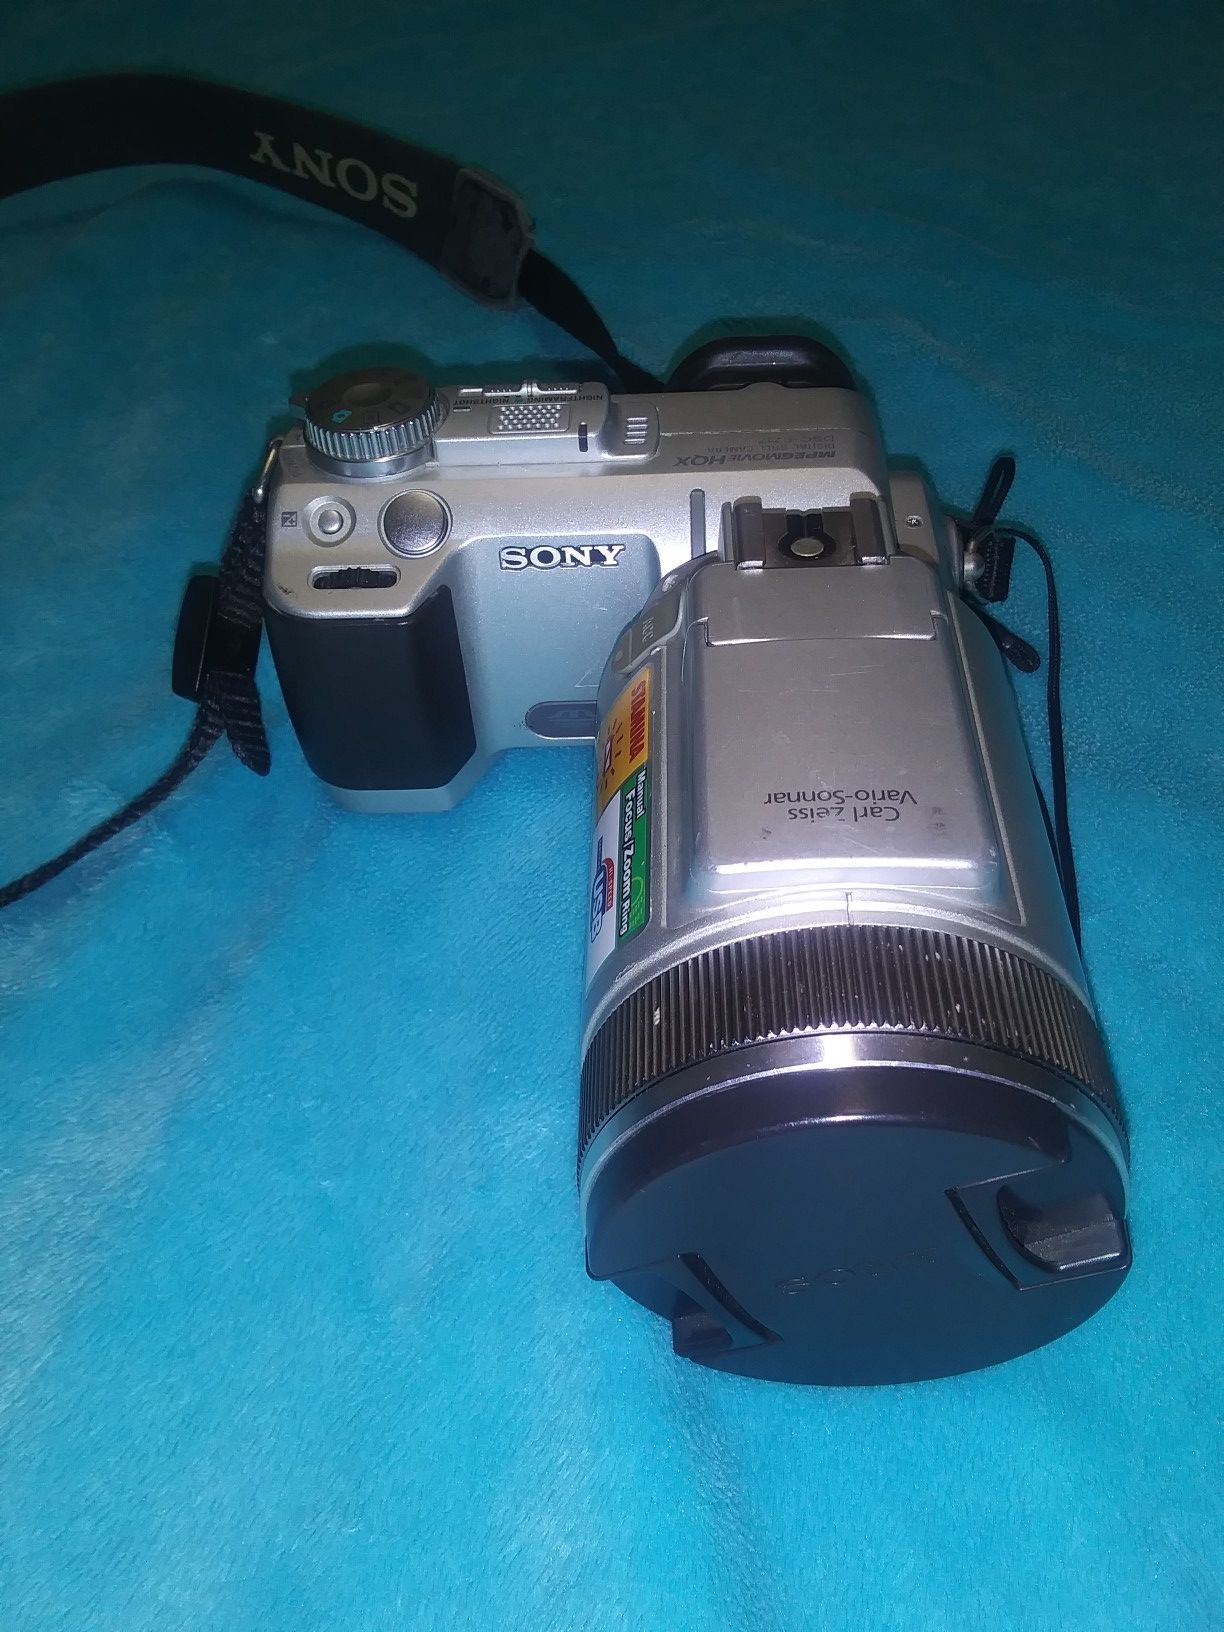 SONY Cyber-shot DSC F717 Digital Camera